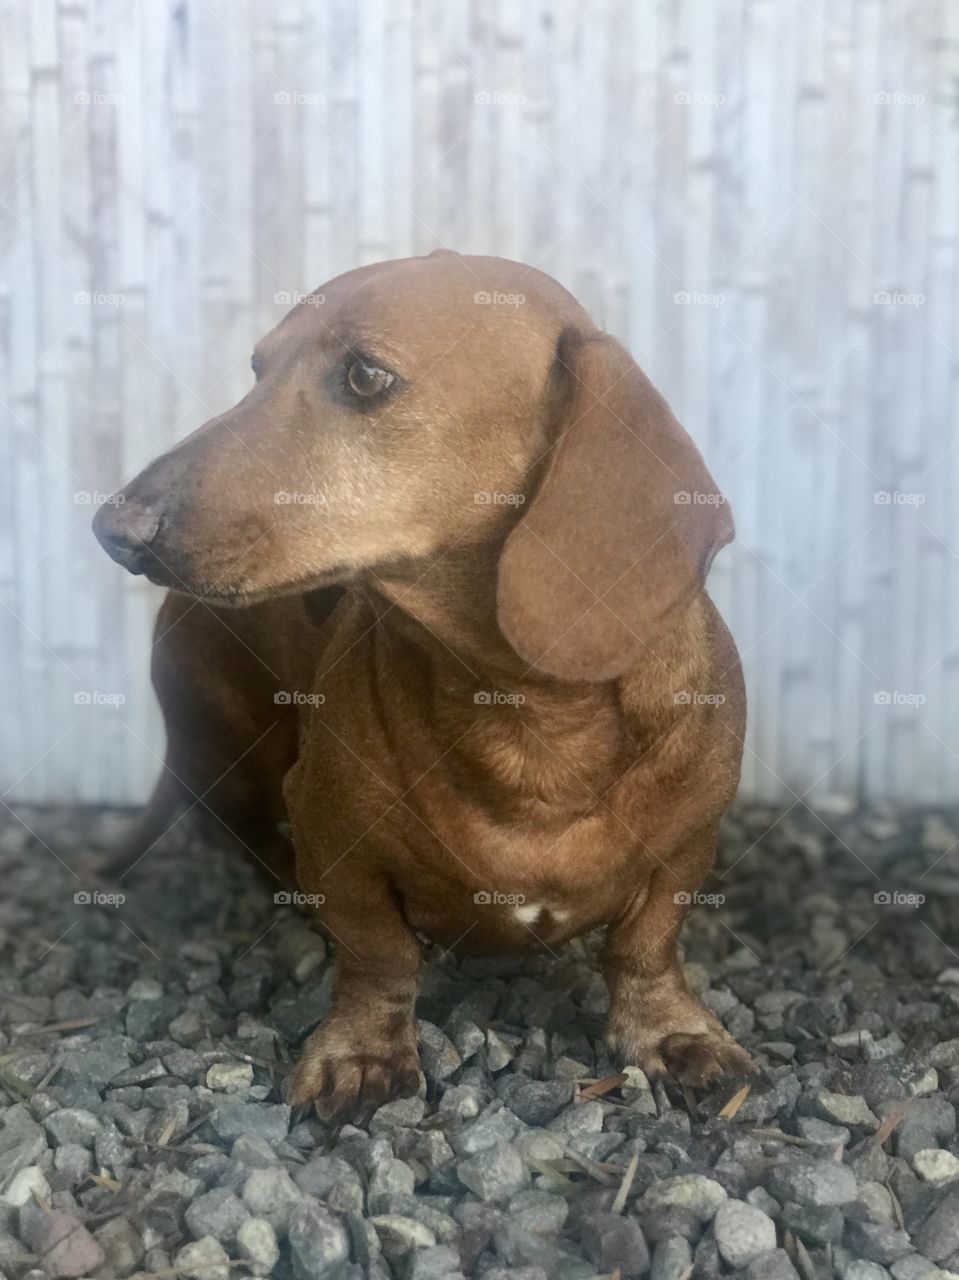 Adorable dachshund sitting on stones.